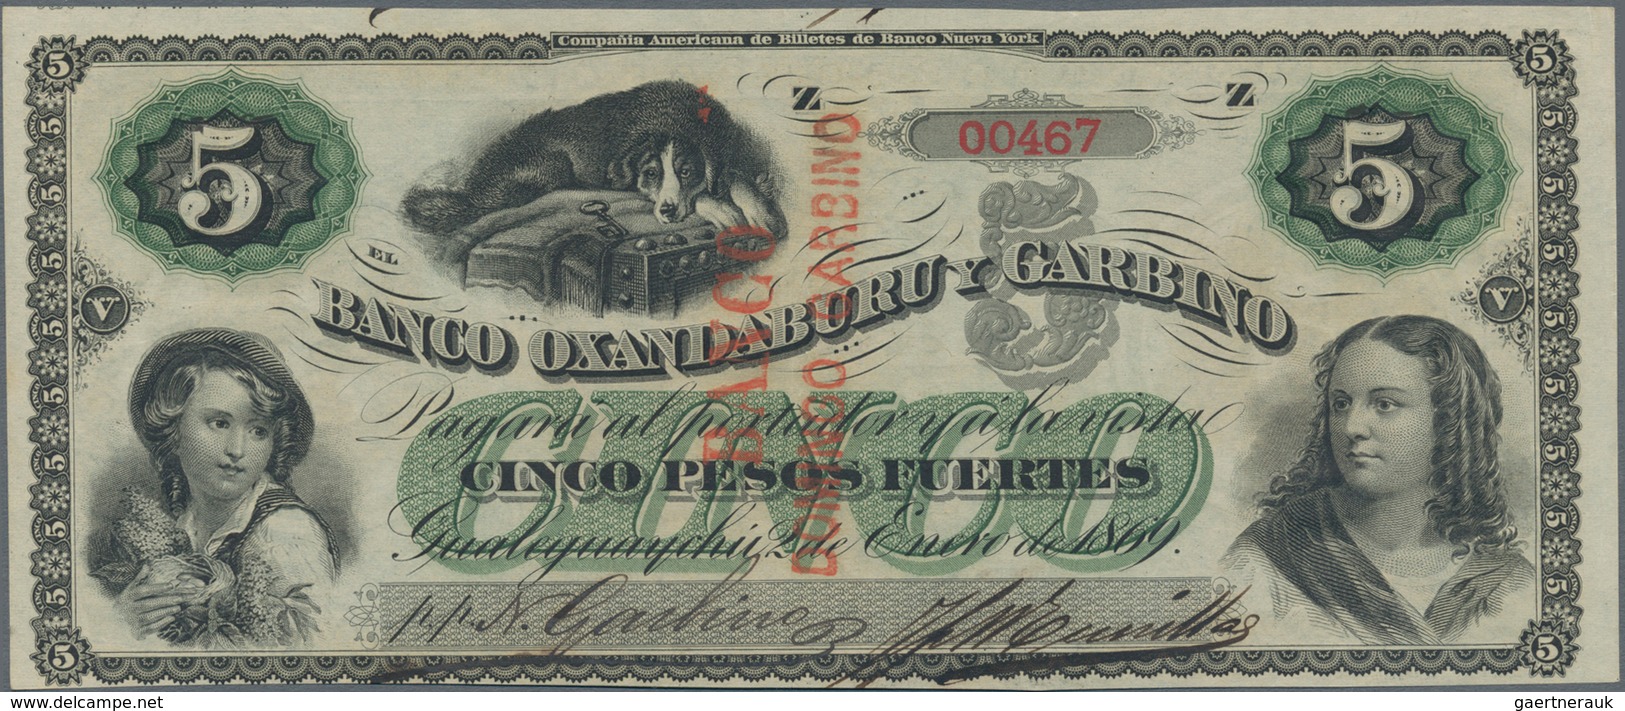 Argentina / Argentinien: Banco Oxandaburu Y Garbino 5 Pesos Fuertes 1869 With Red Overprint "BANCO D - Argentina